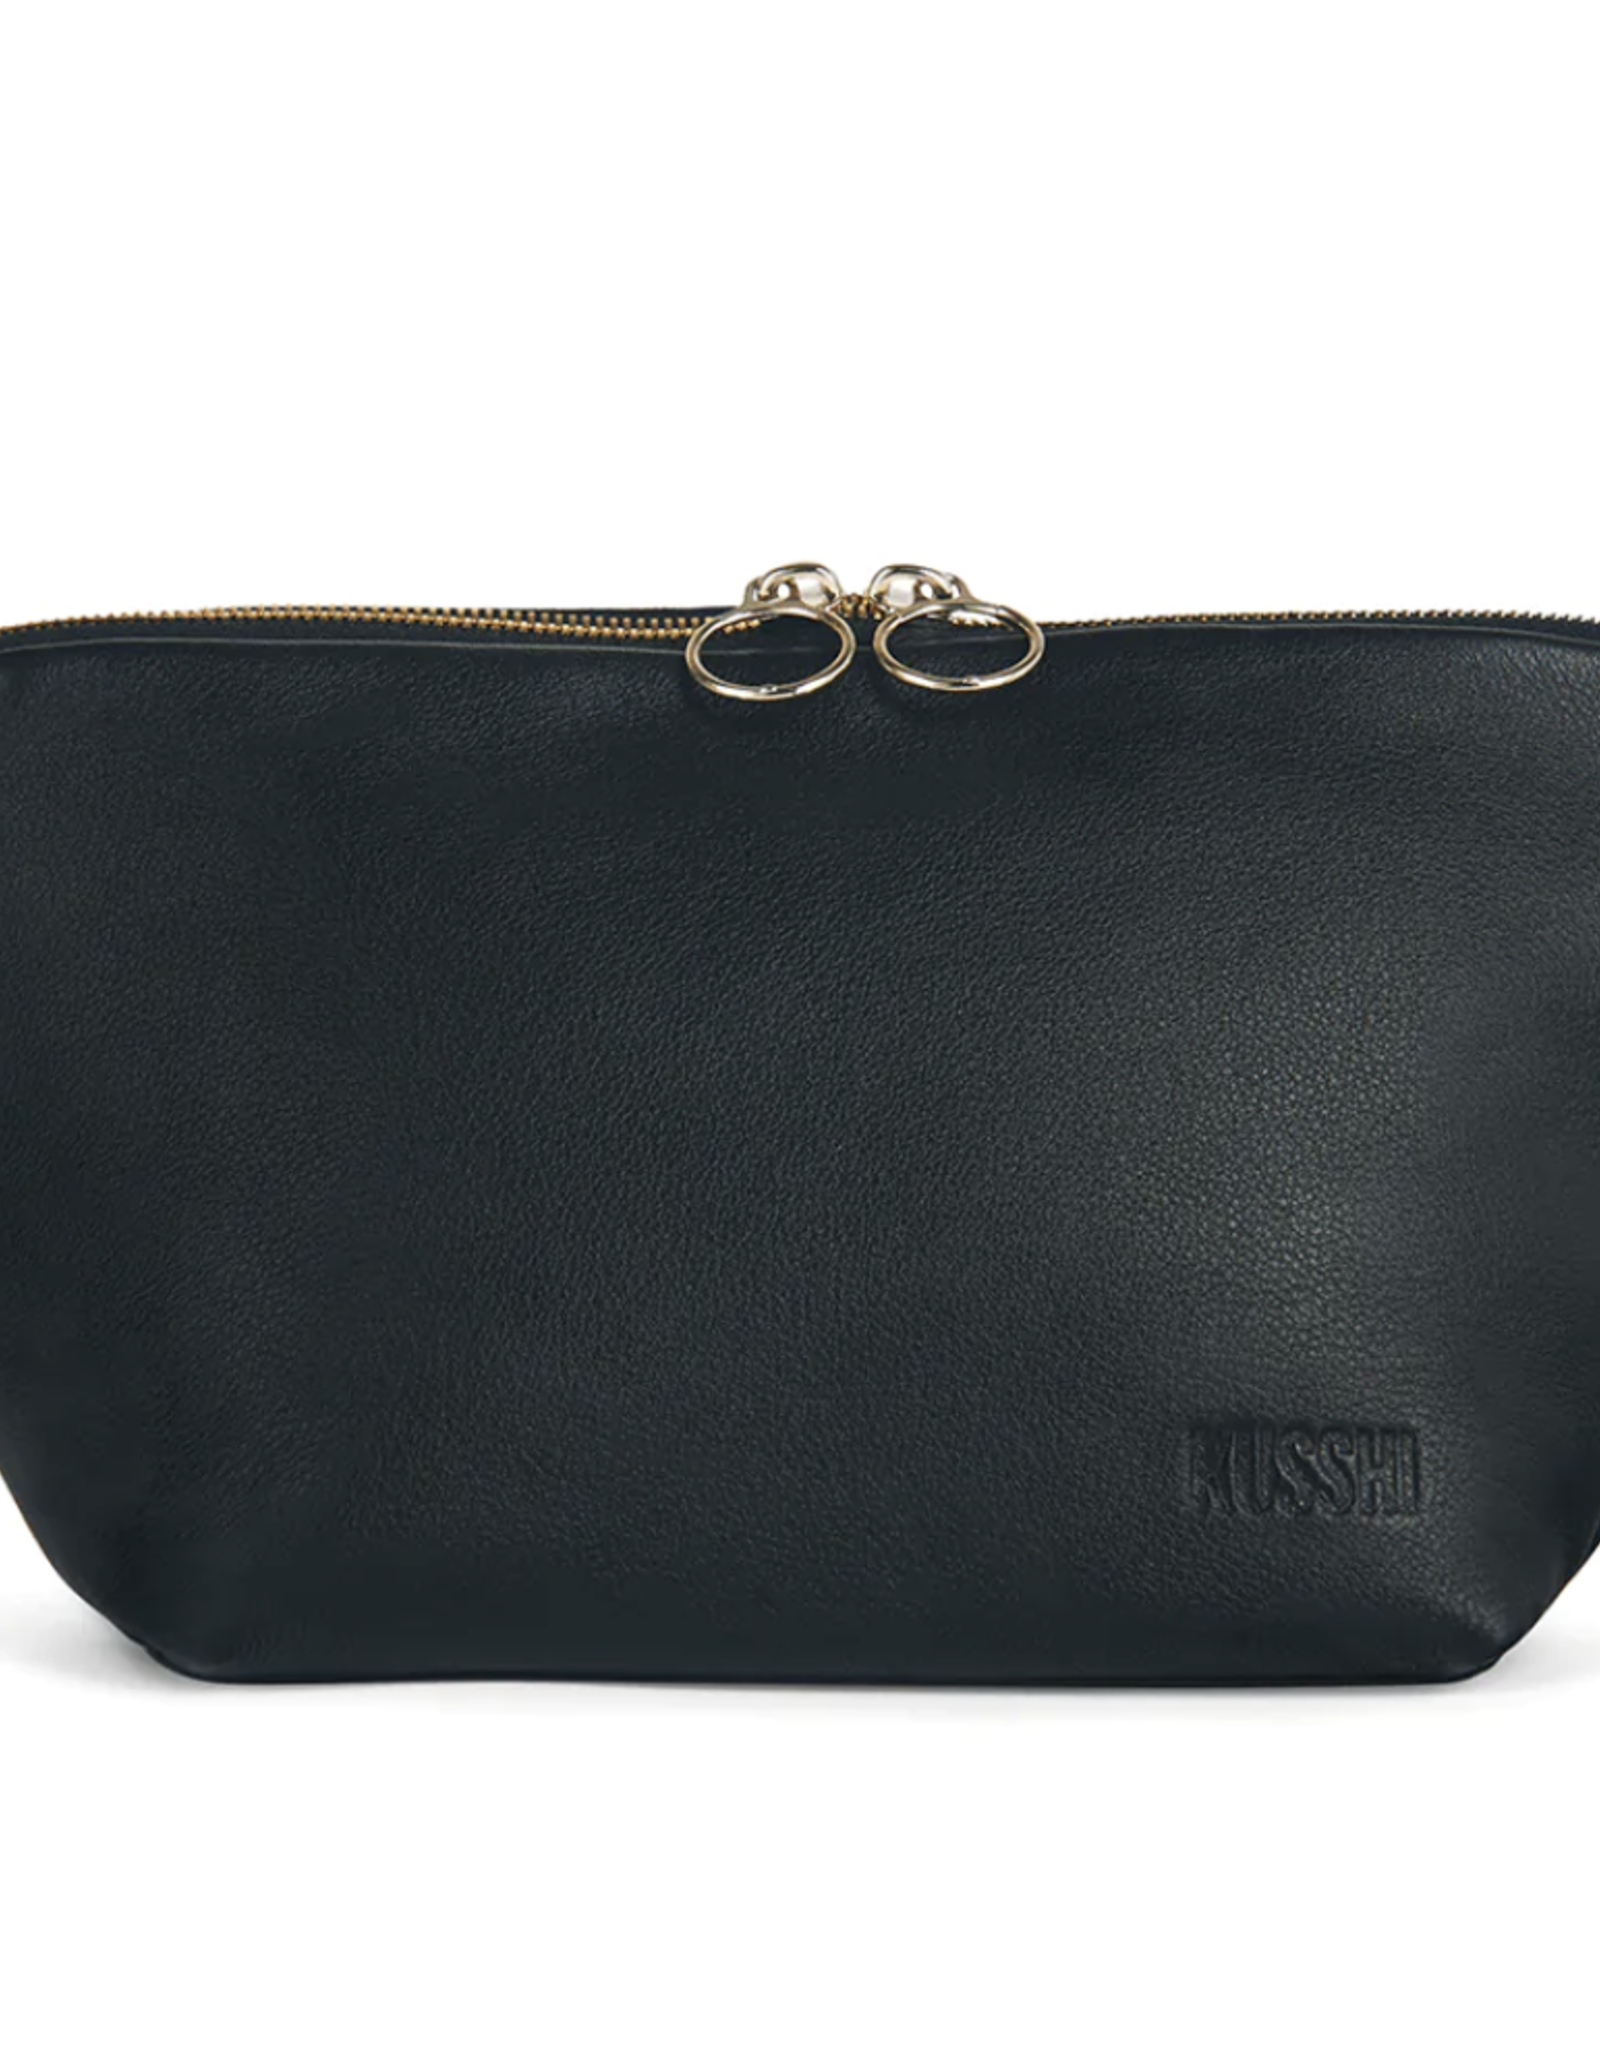 KUSSHI Kusshi Signature Makeup Bag - Leather